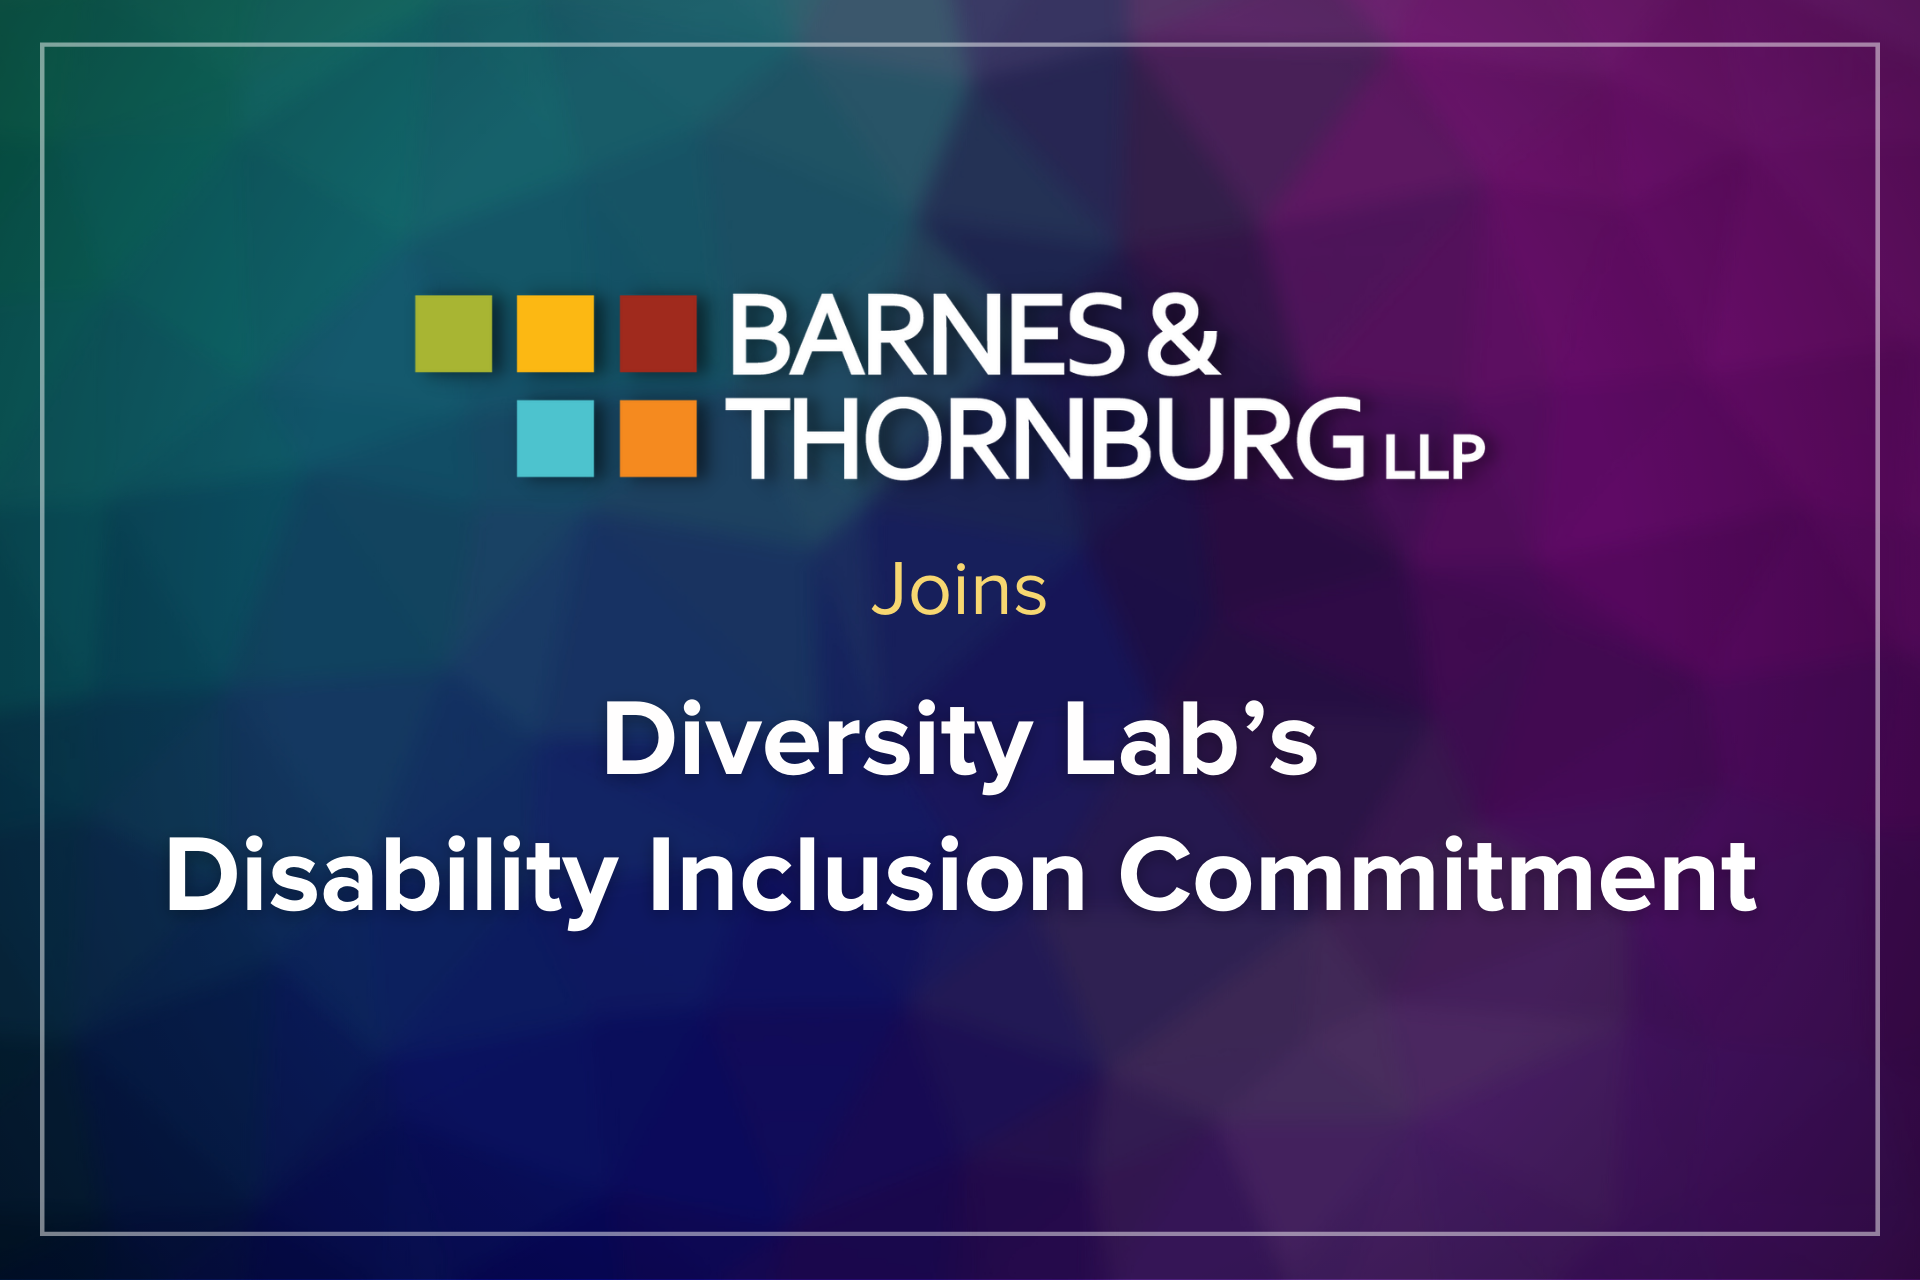 Diversity Lab’s Disability Inclusion Commitment Detail